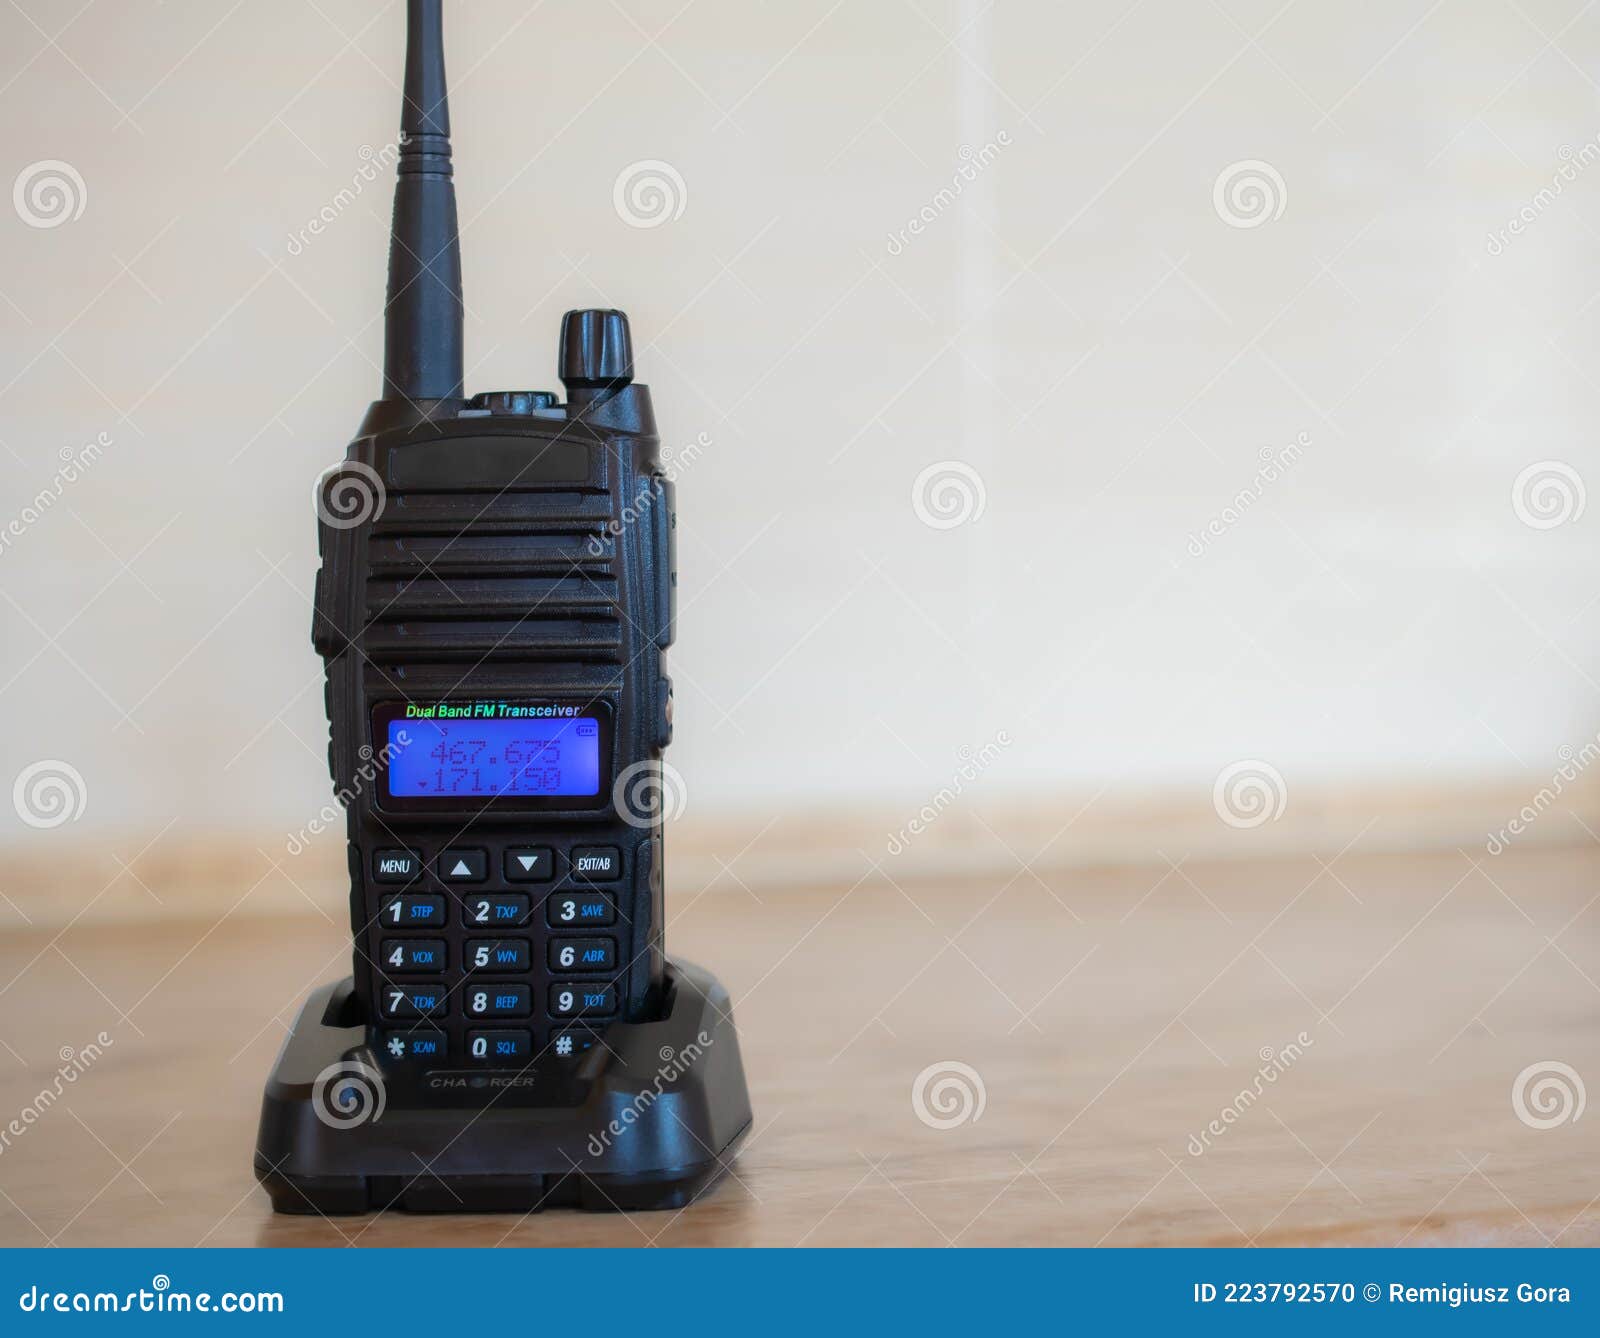 portable radio transceiver. portable cb radio. handheld walkie talkie